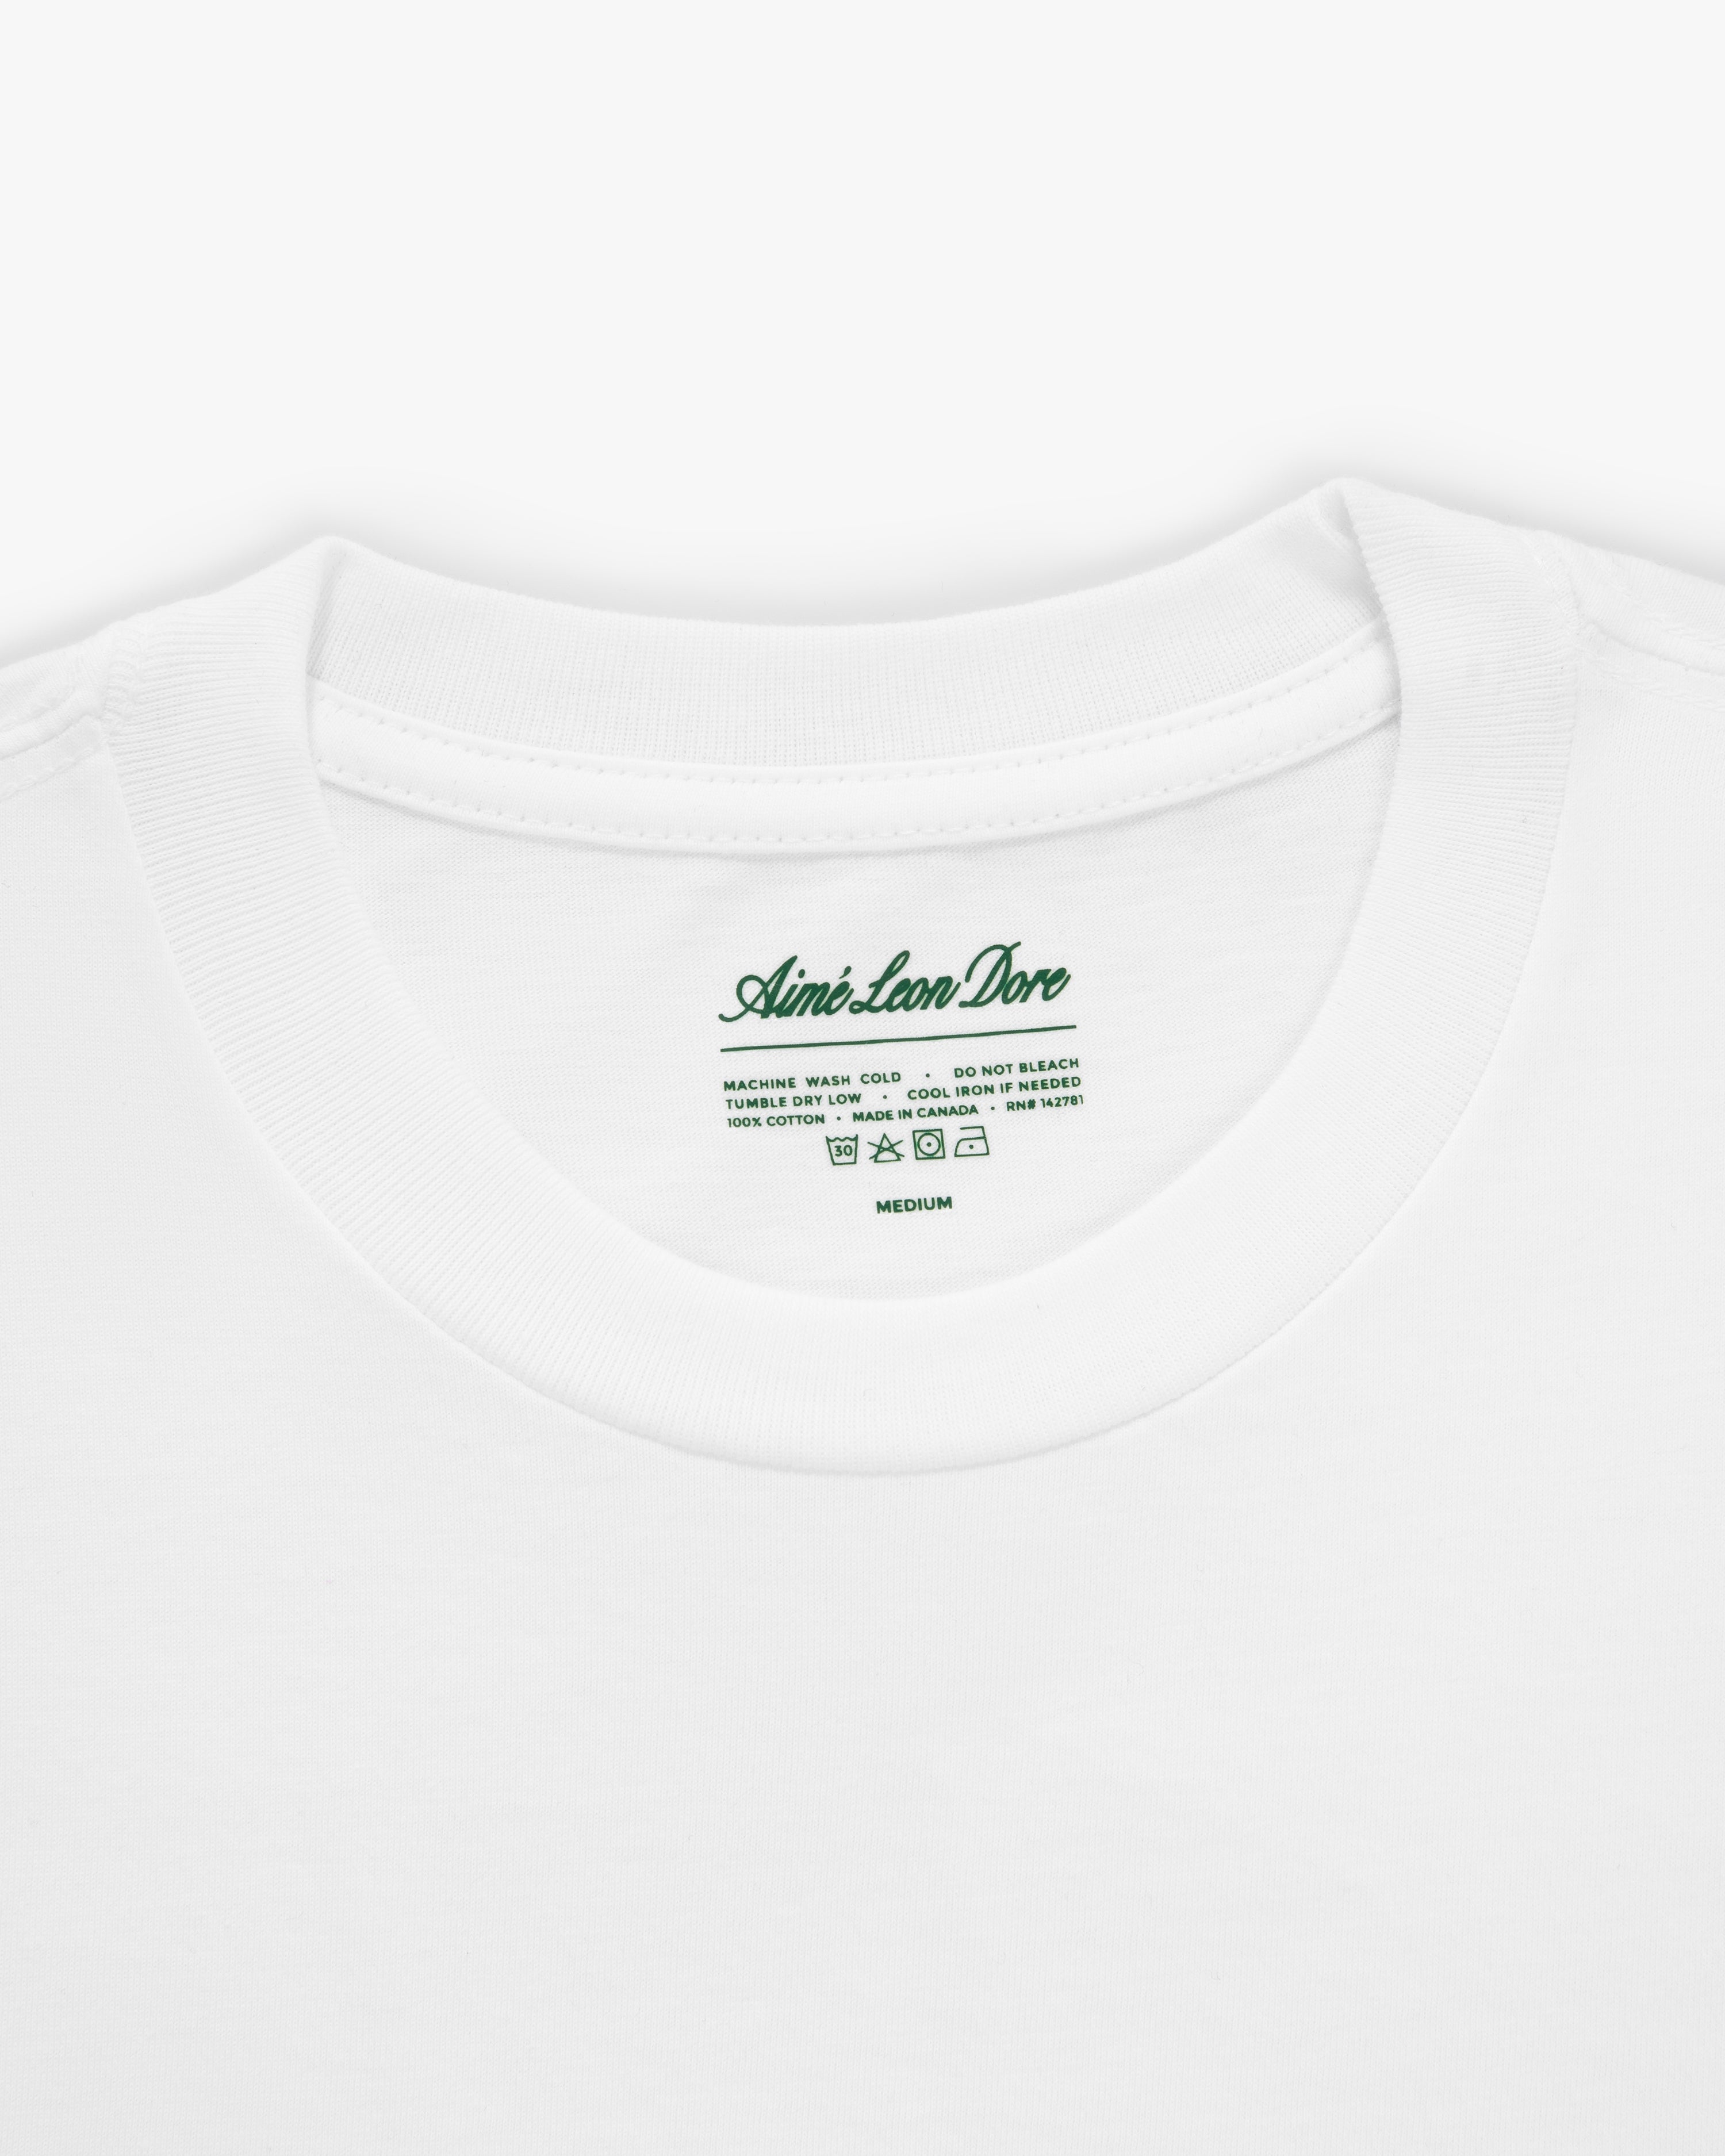 White T-shirt 3-Pack